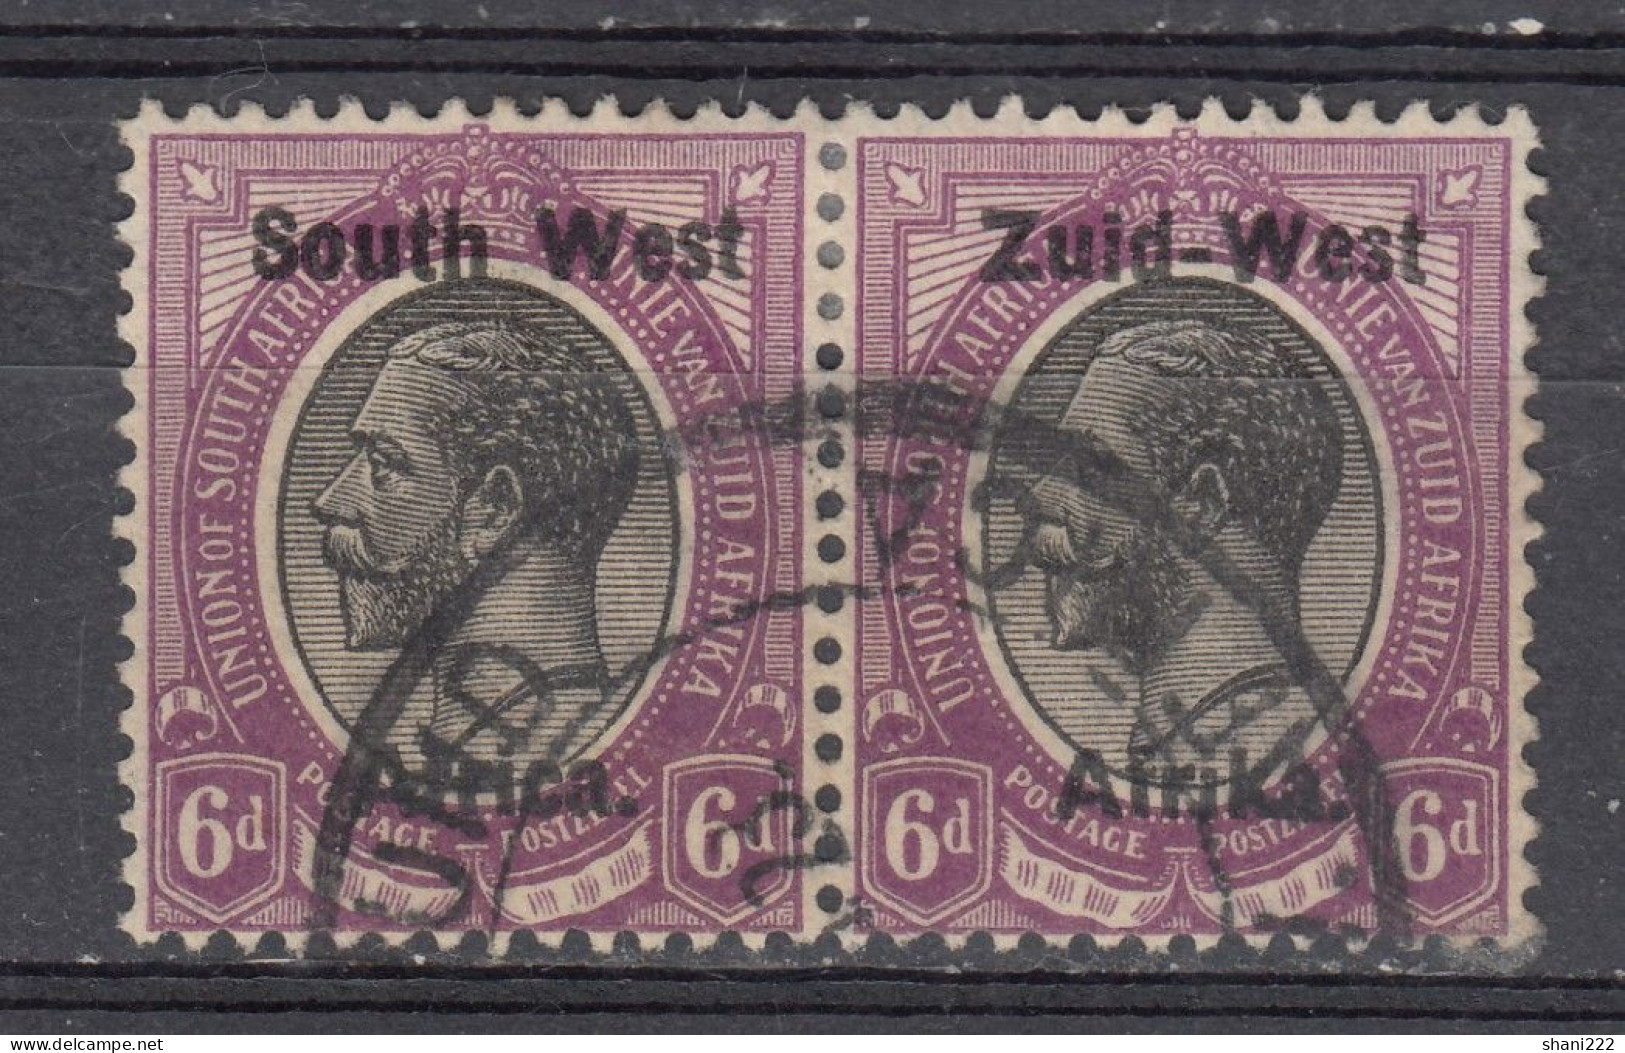 South West Africa - 1923 - Overprinted - Hyphenated - 6d,  Pair (e-746) - Afrique Du Sud-Ouest (1923-1990)